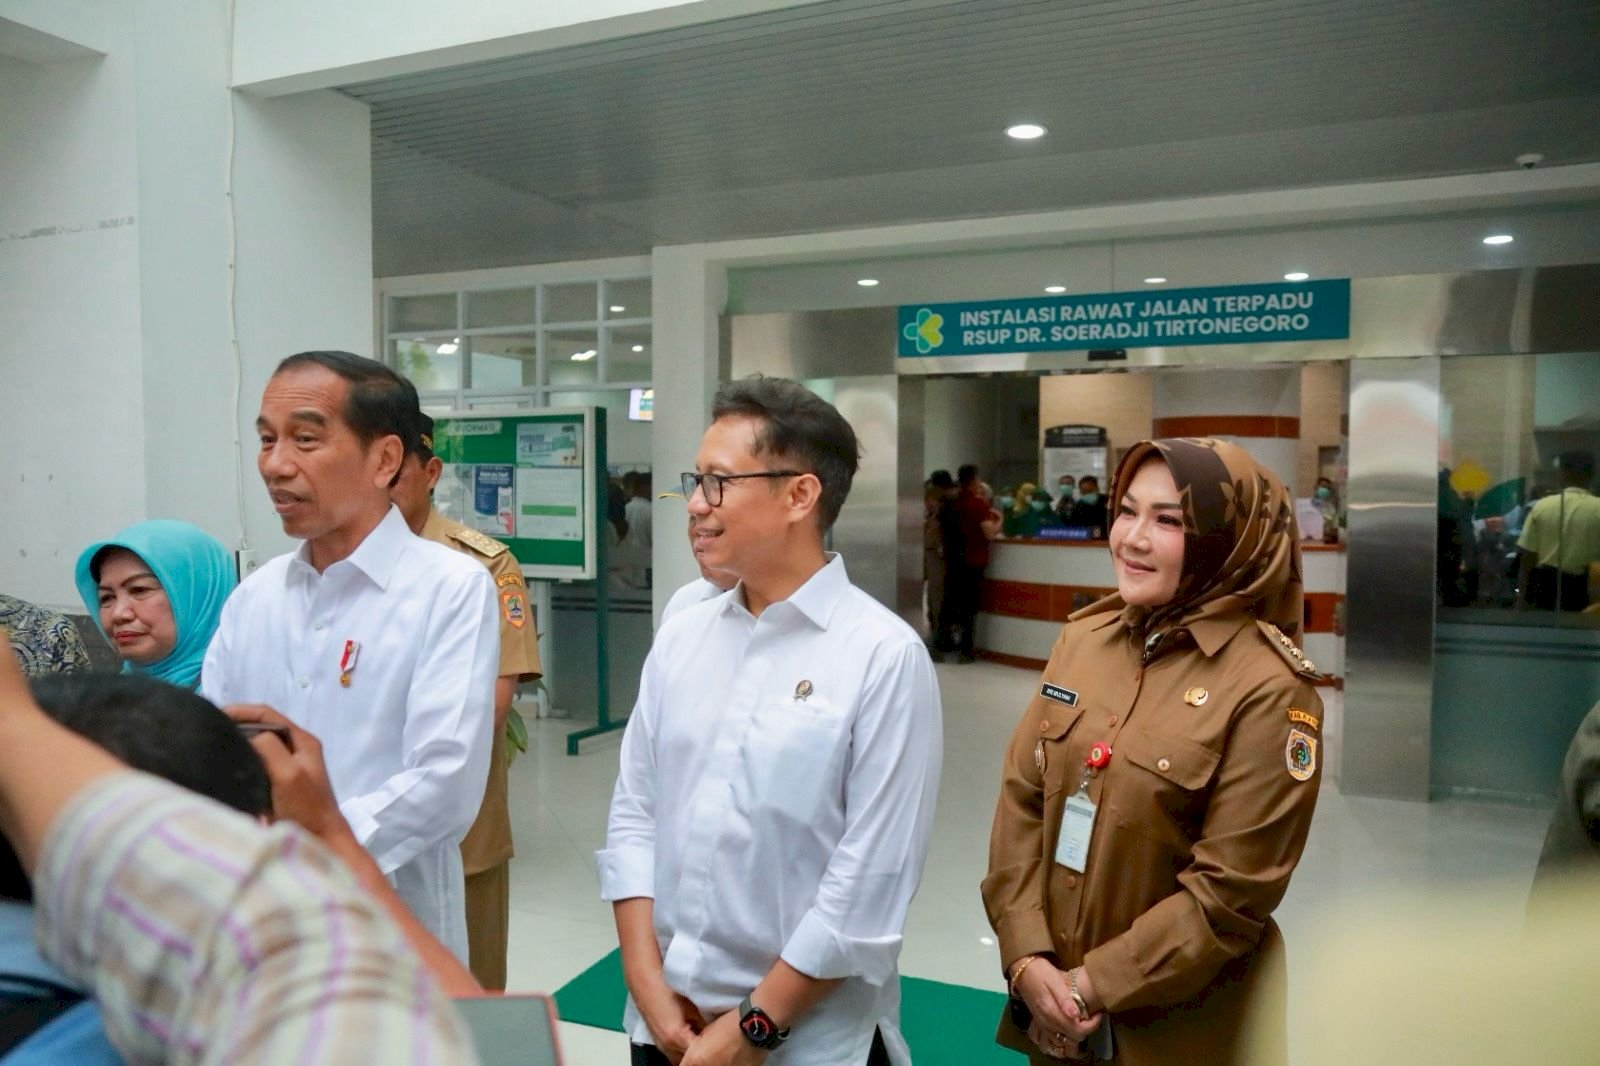 Presiden Jokowi Apresiasi Pelayanan RSUP Dr. Soeradji Tirtonegoro Klaten